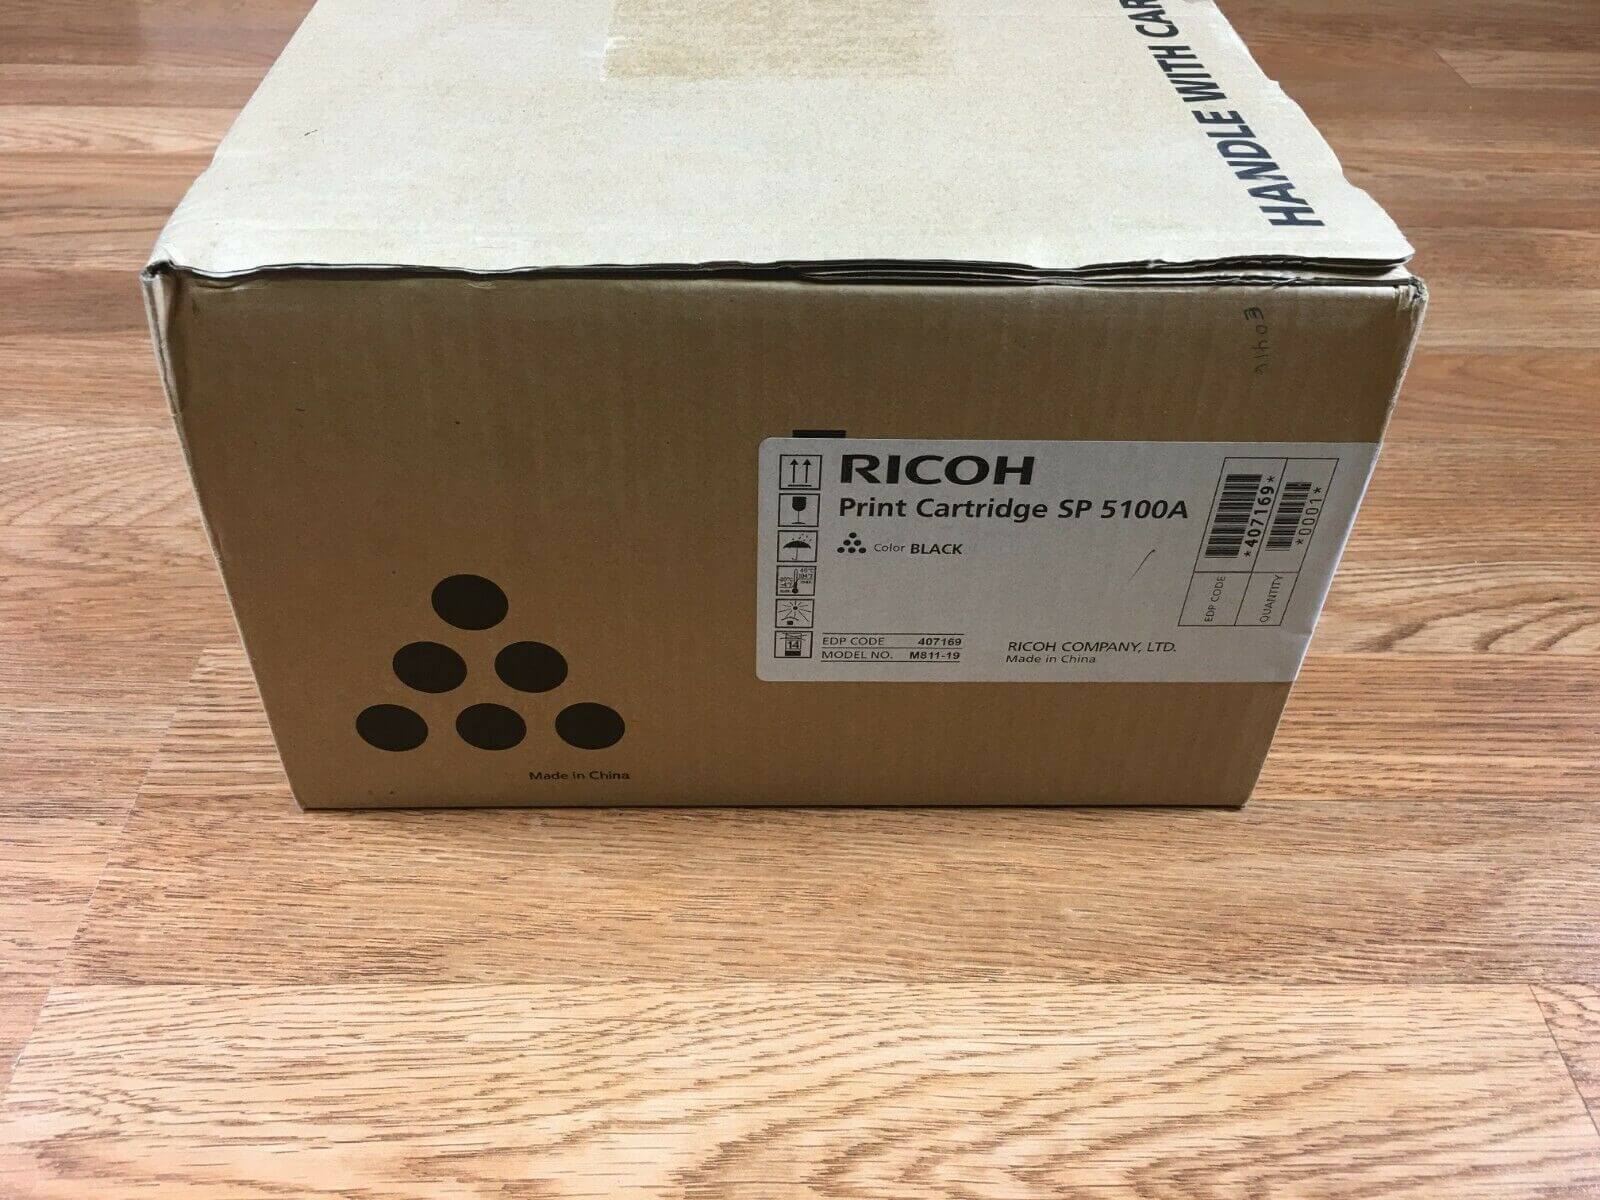 Genuine New Ricoh SP 5100A Black Print Cartridge 407169 FedEx 2Day Air!! - copier-clearance-center